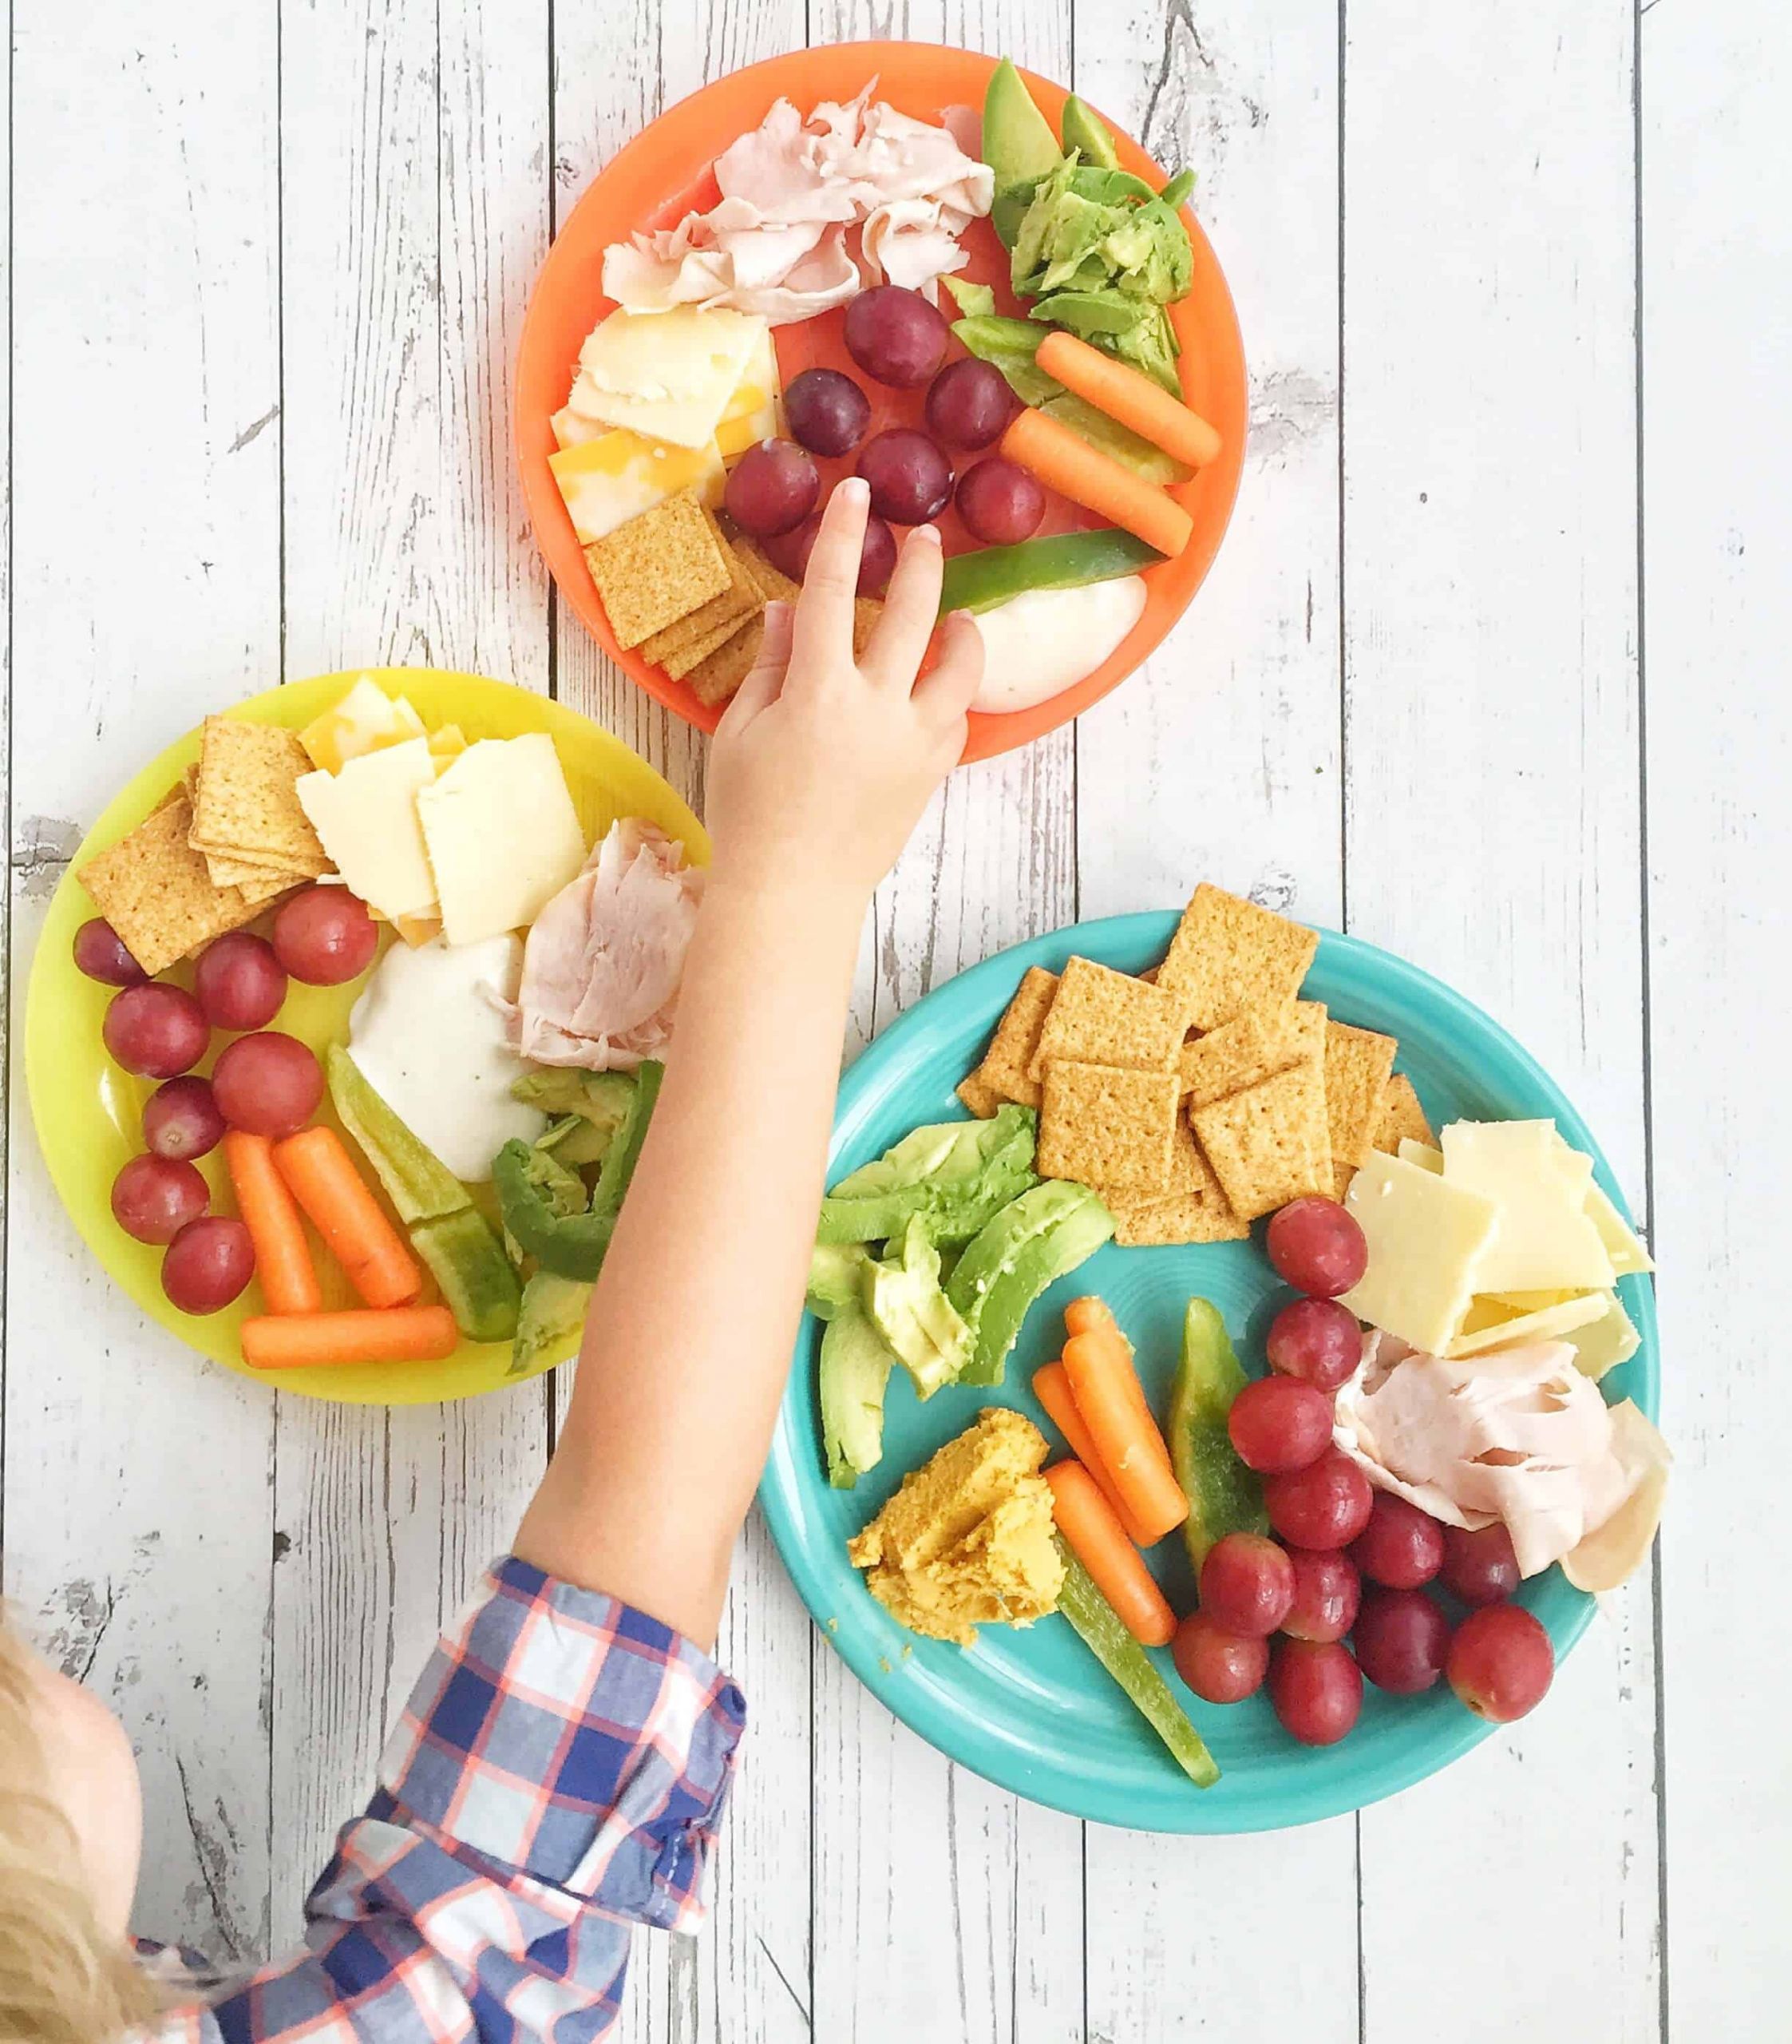 Healthy Dinner Recipes for Kids Elegant Healthy Meals for Kids Make Healthy Easy Jenna Braddock Rd